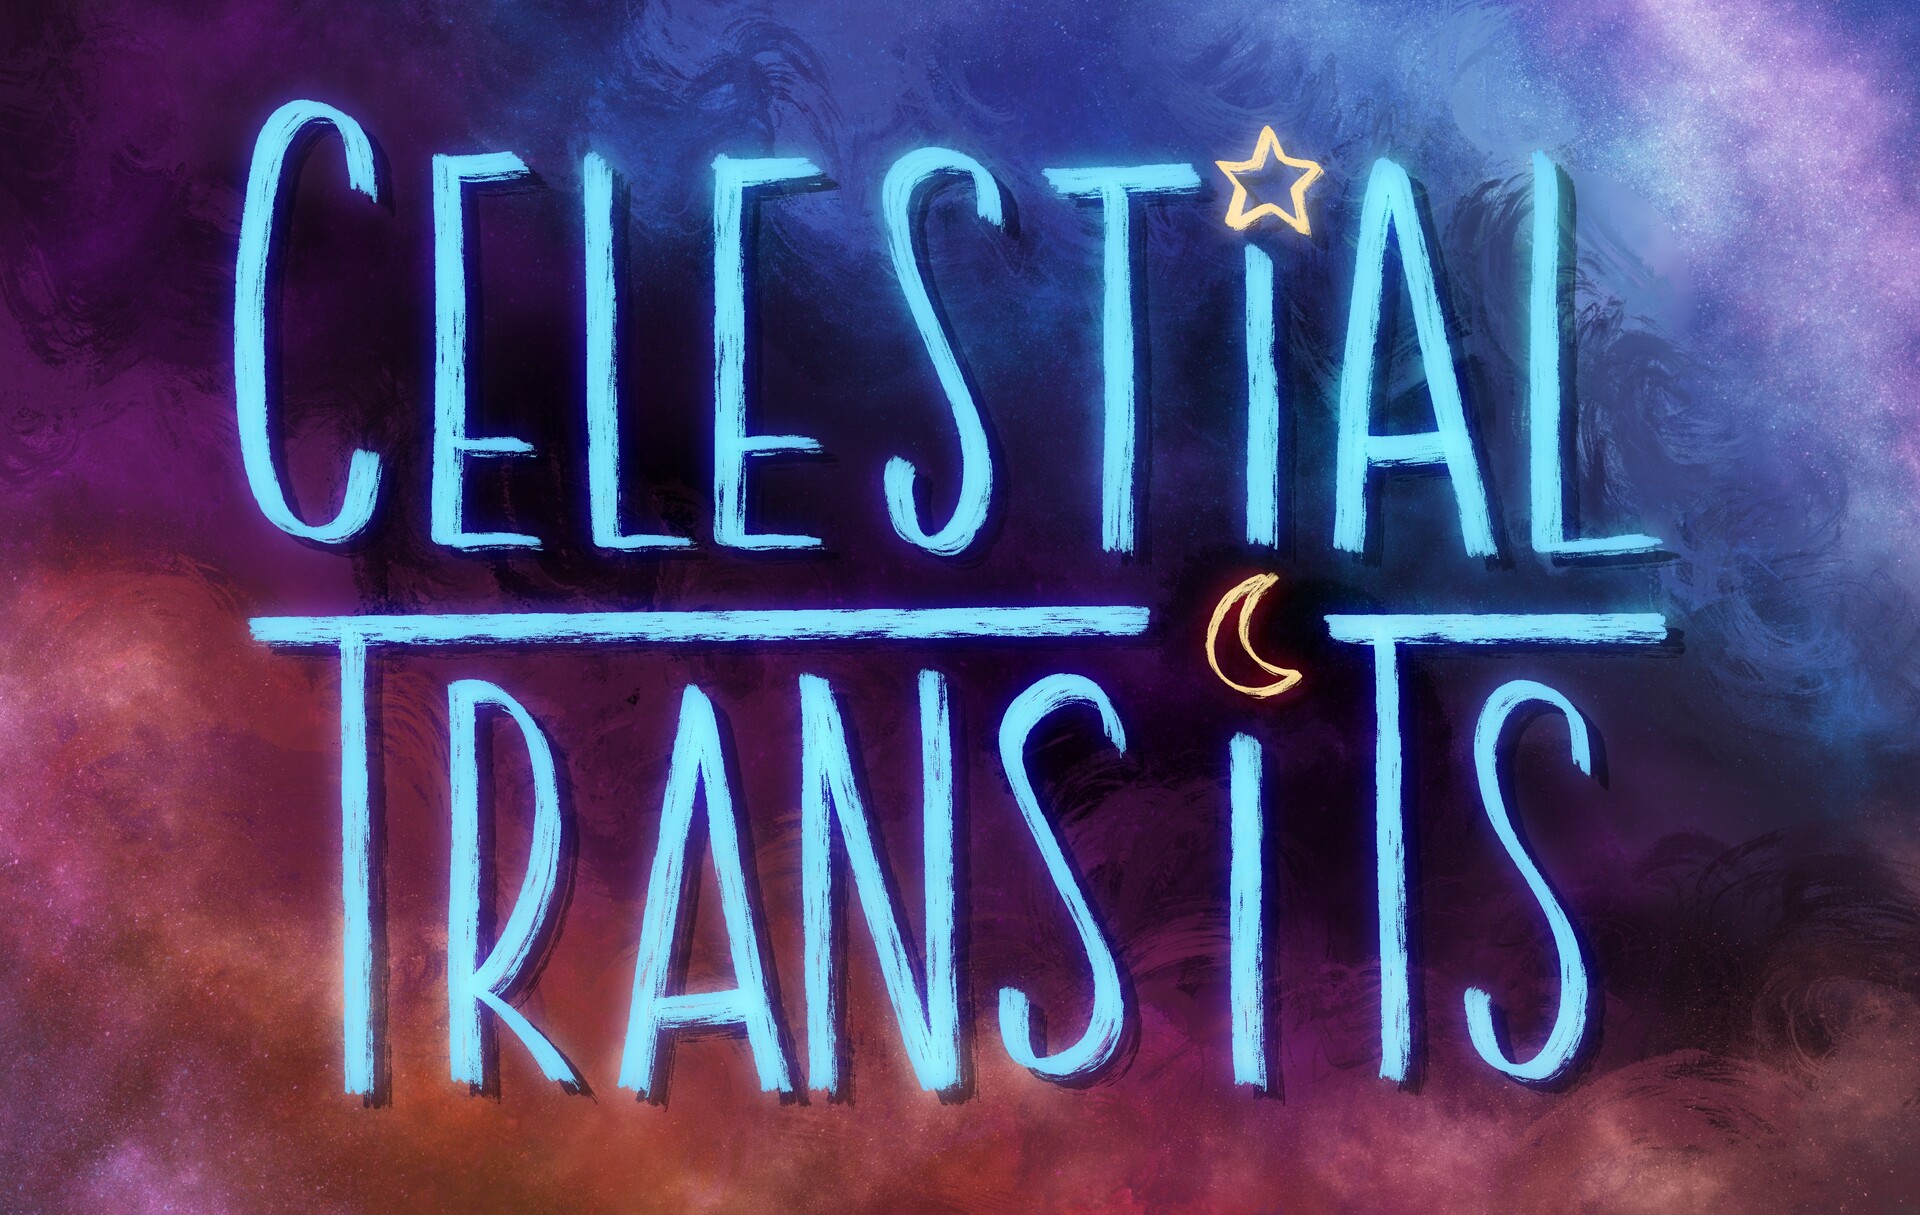 Title Design - Celestial Transits